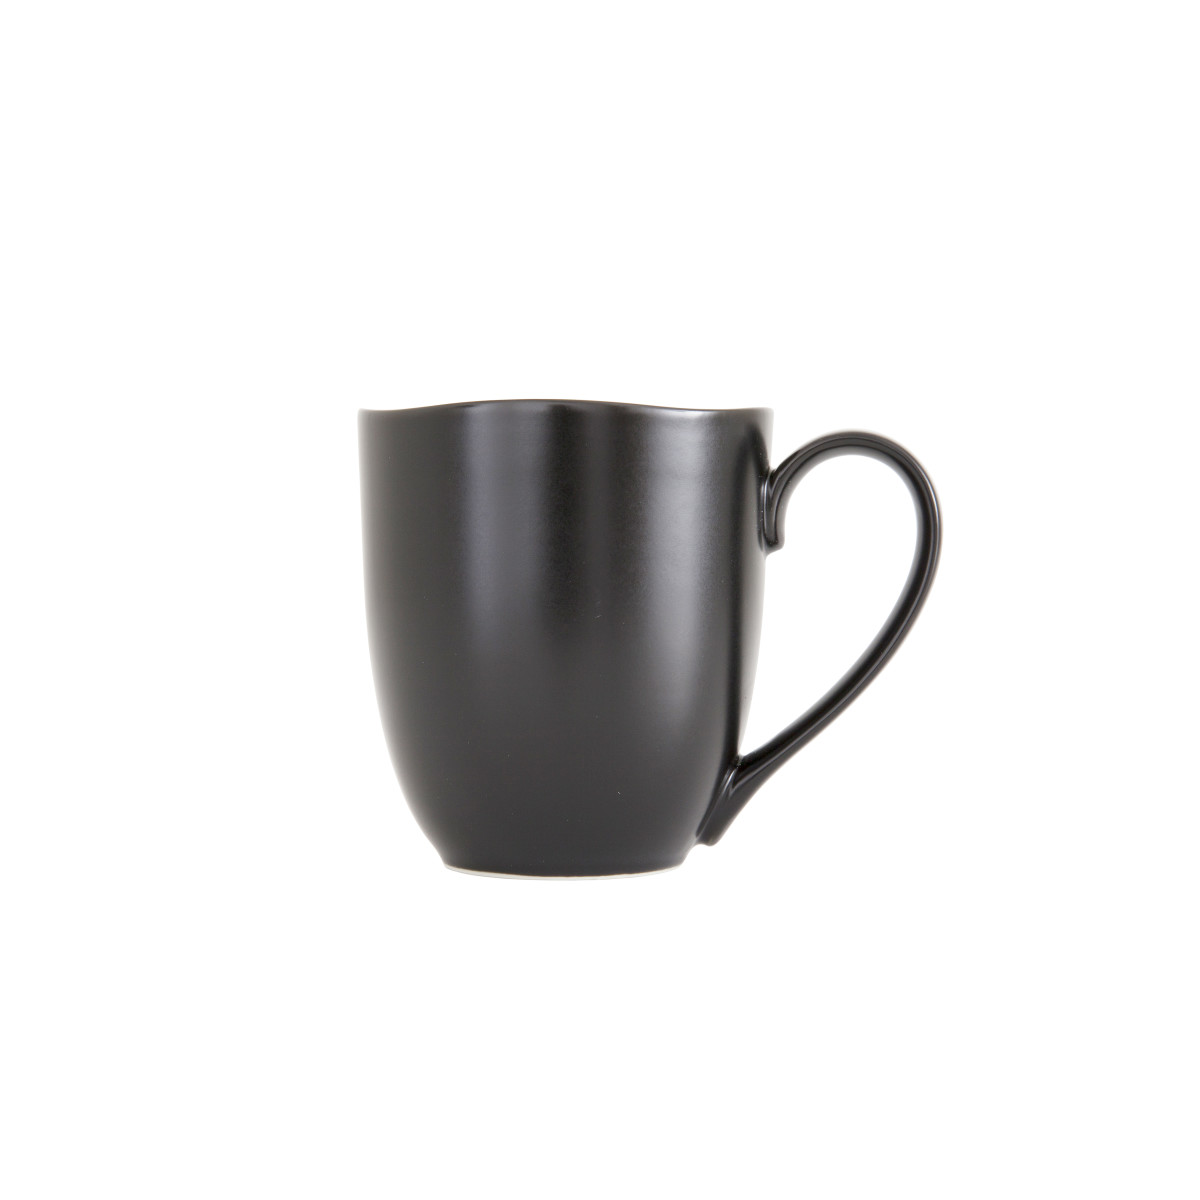 Heirloom Mug, Charcoal, Set of 4